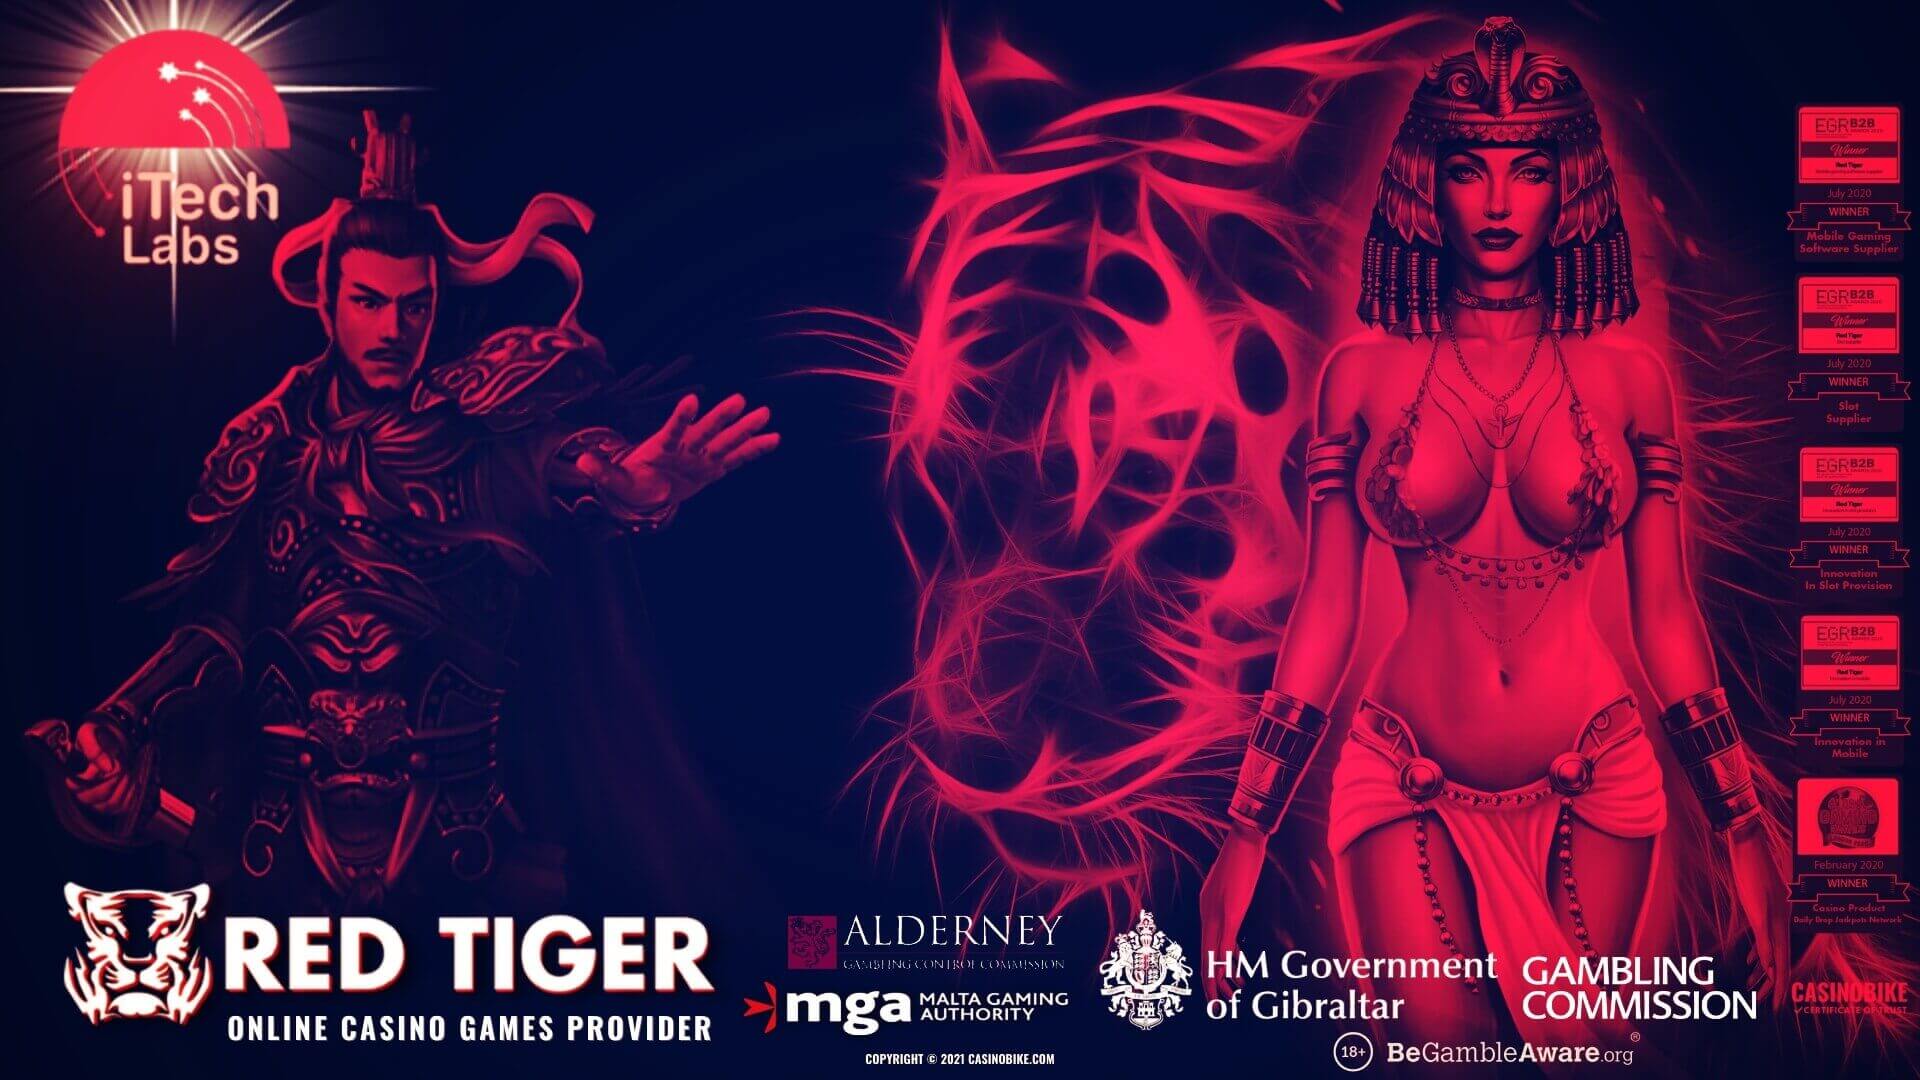 Red Tiger Online Casino Games Provider